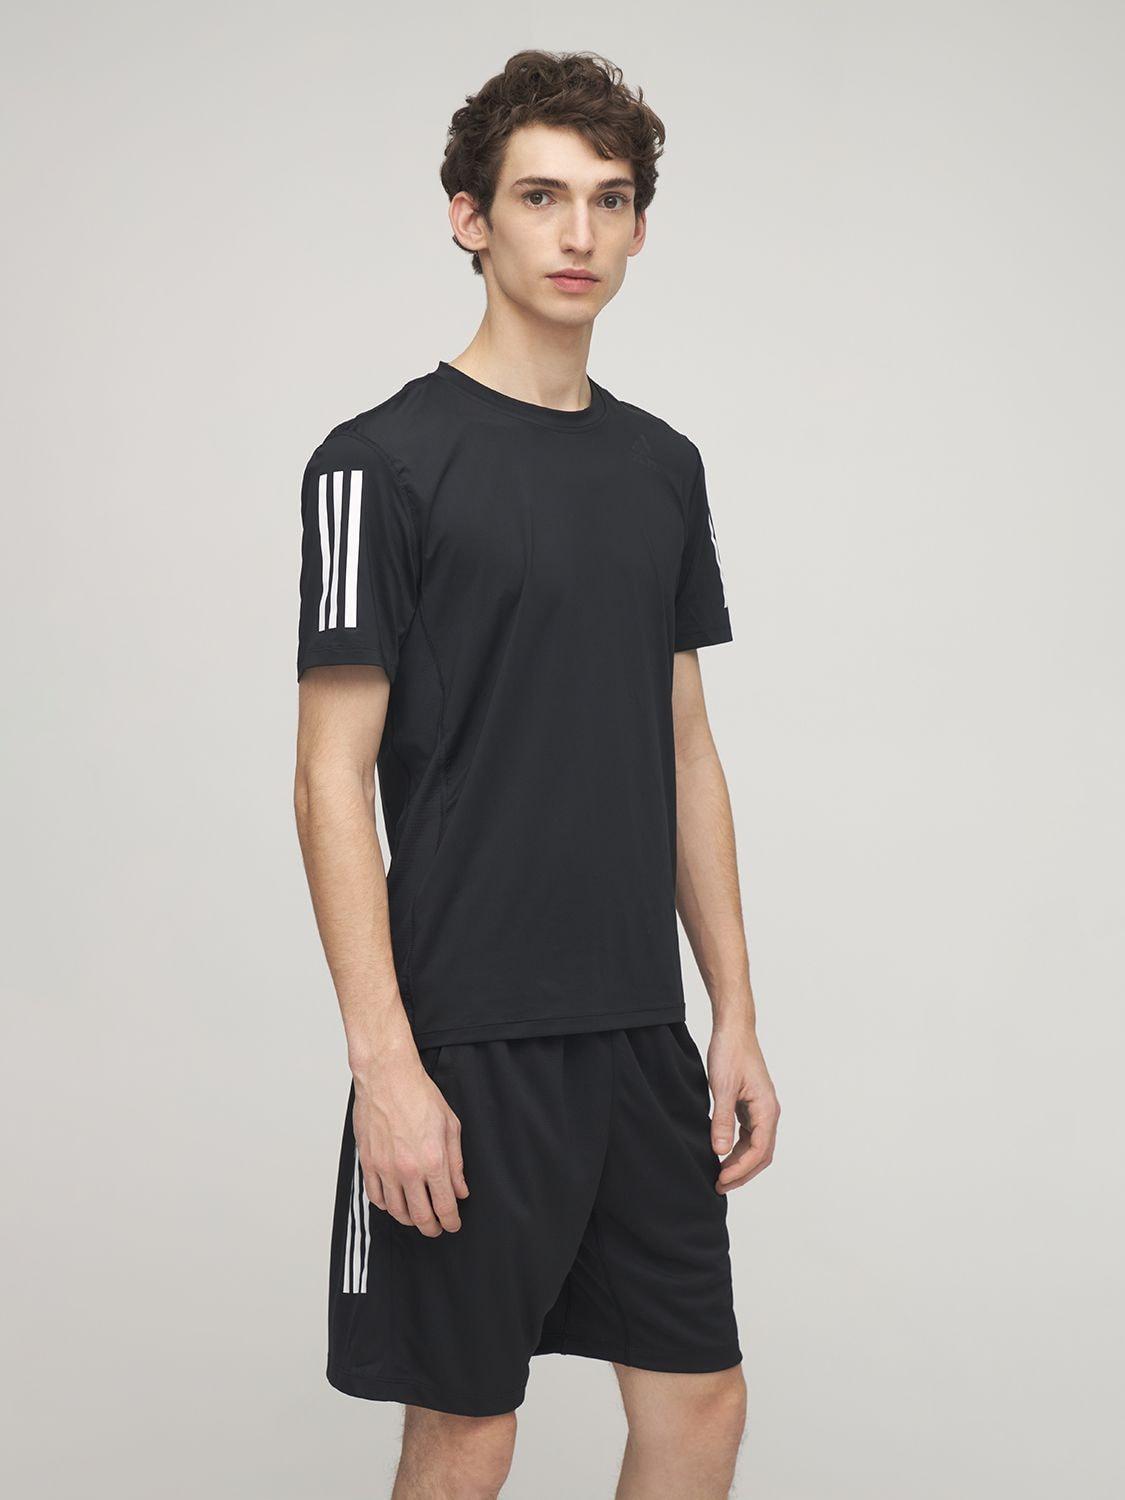 Grey for Men adidas Originals Techfit Primegreen T-shirt in Black Mens Clothing T-shirts Long-sleeve t-shirts Save 13% 